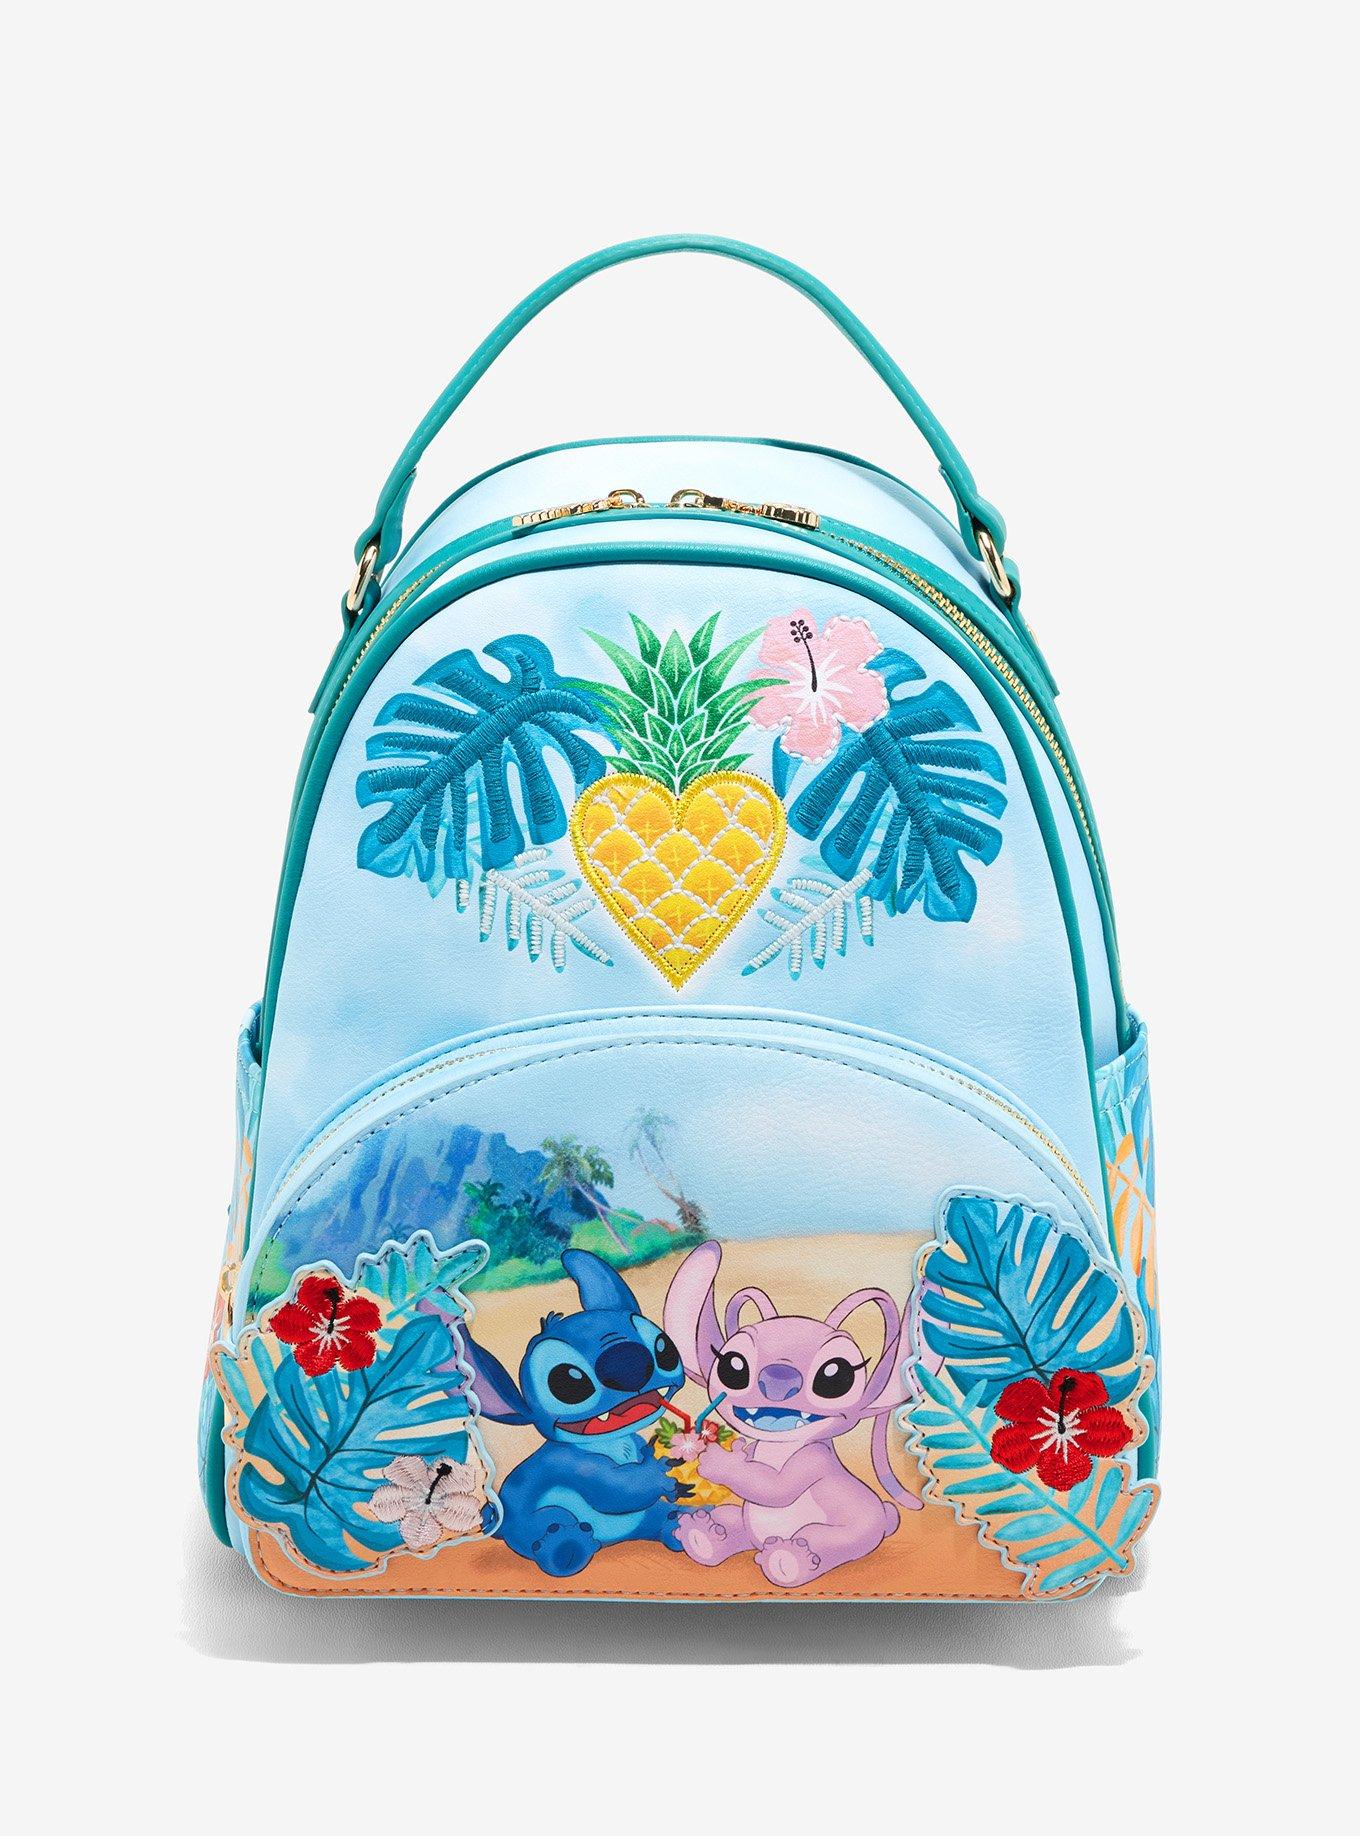 Disney Lilo & Stitch Girls' 5-Piece Backpack Lunchbox Set - Blue/Multi, One Size